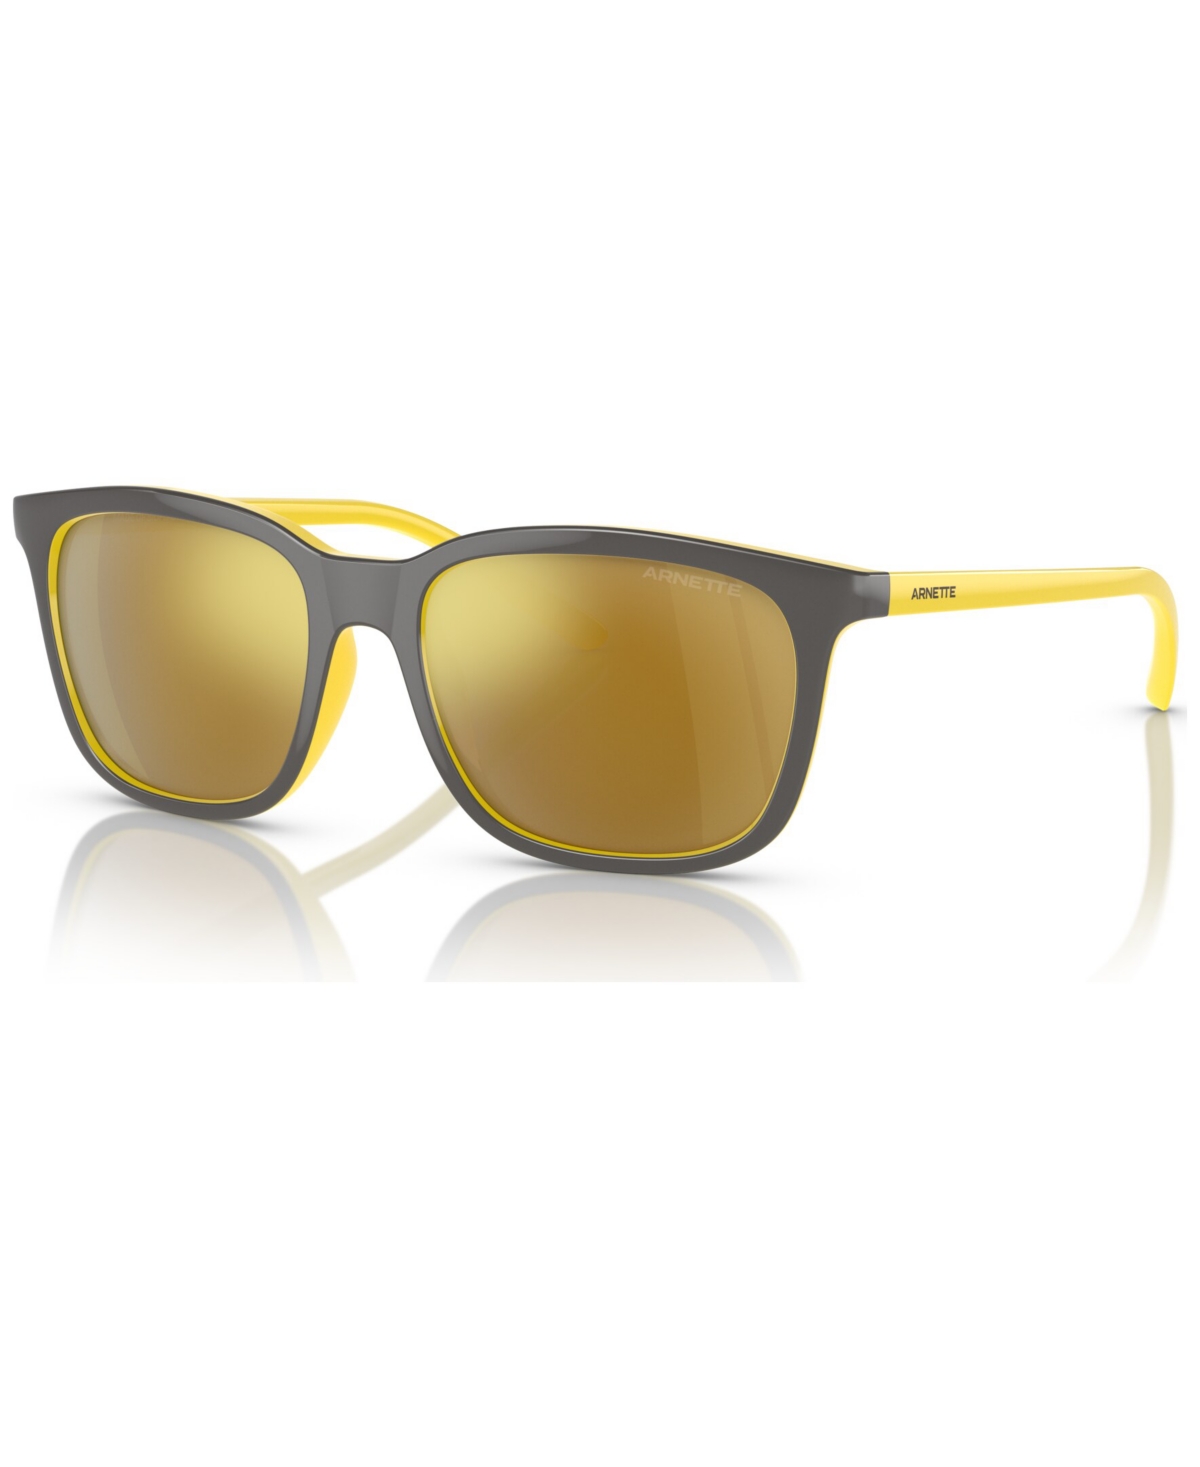 Arnette Kids Sunglasses, C'roll In Yellow